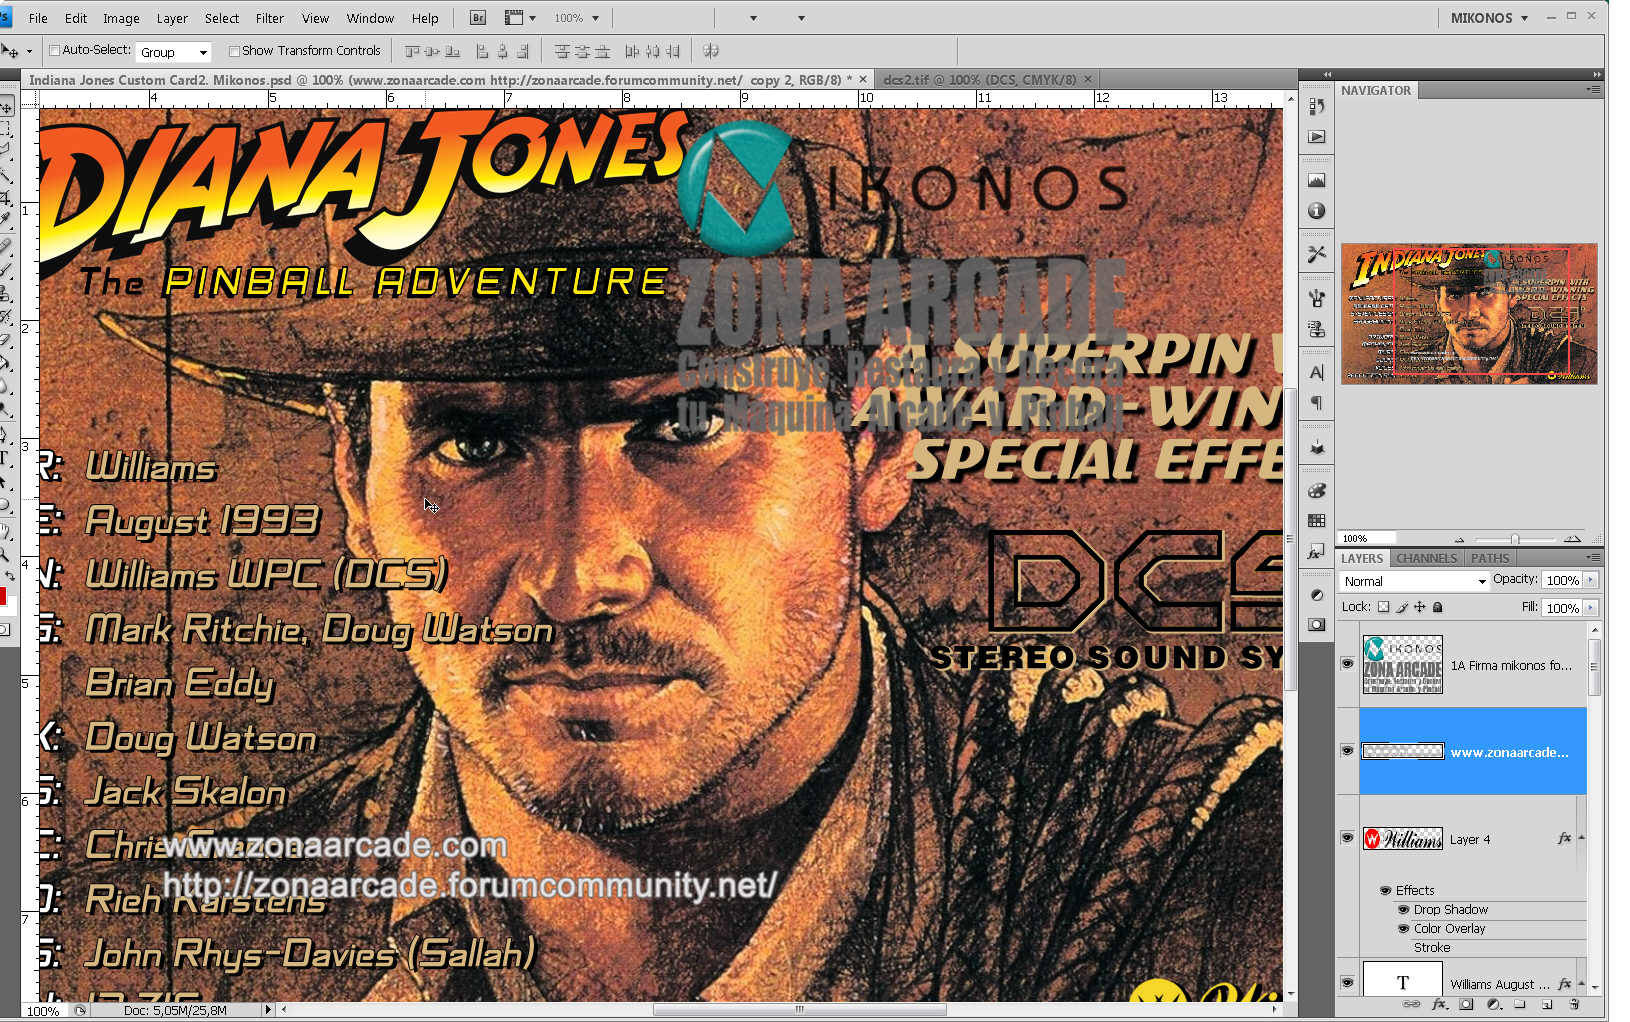 Indiana JonesPinball Custom Card2. Mikonos2